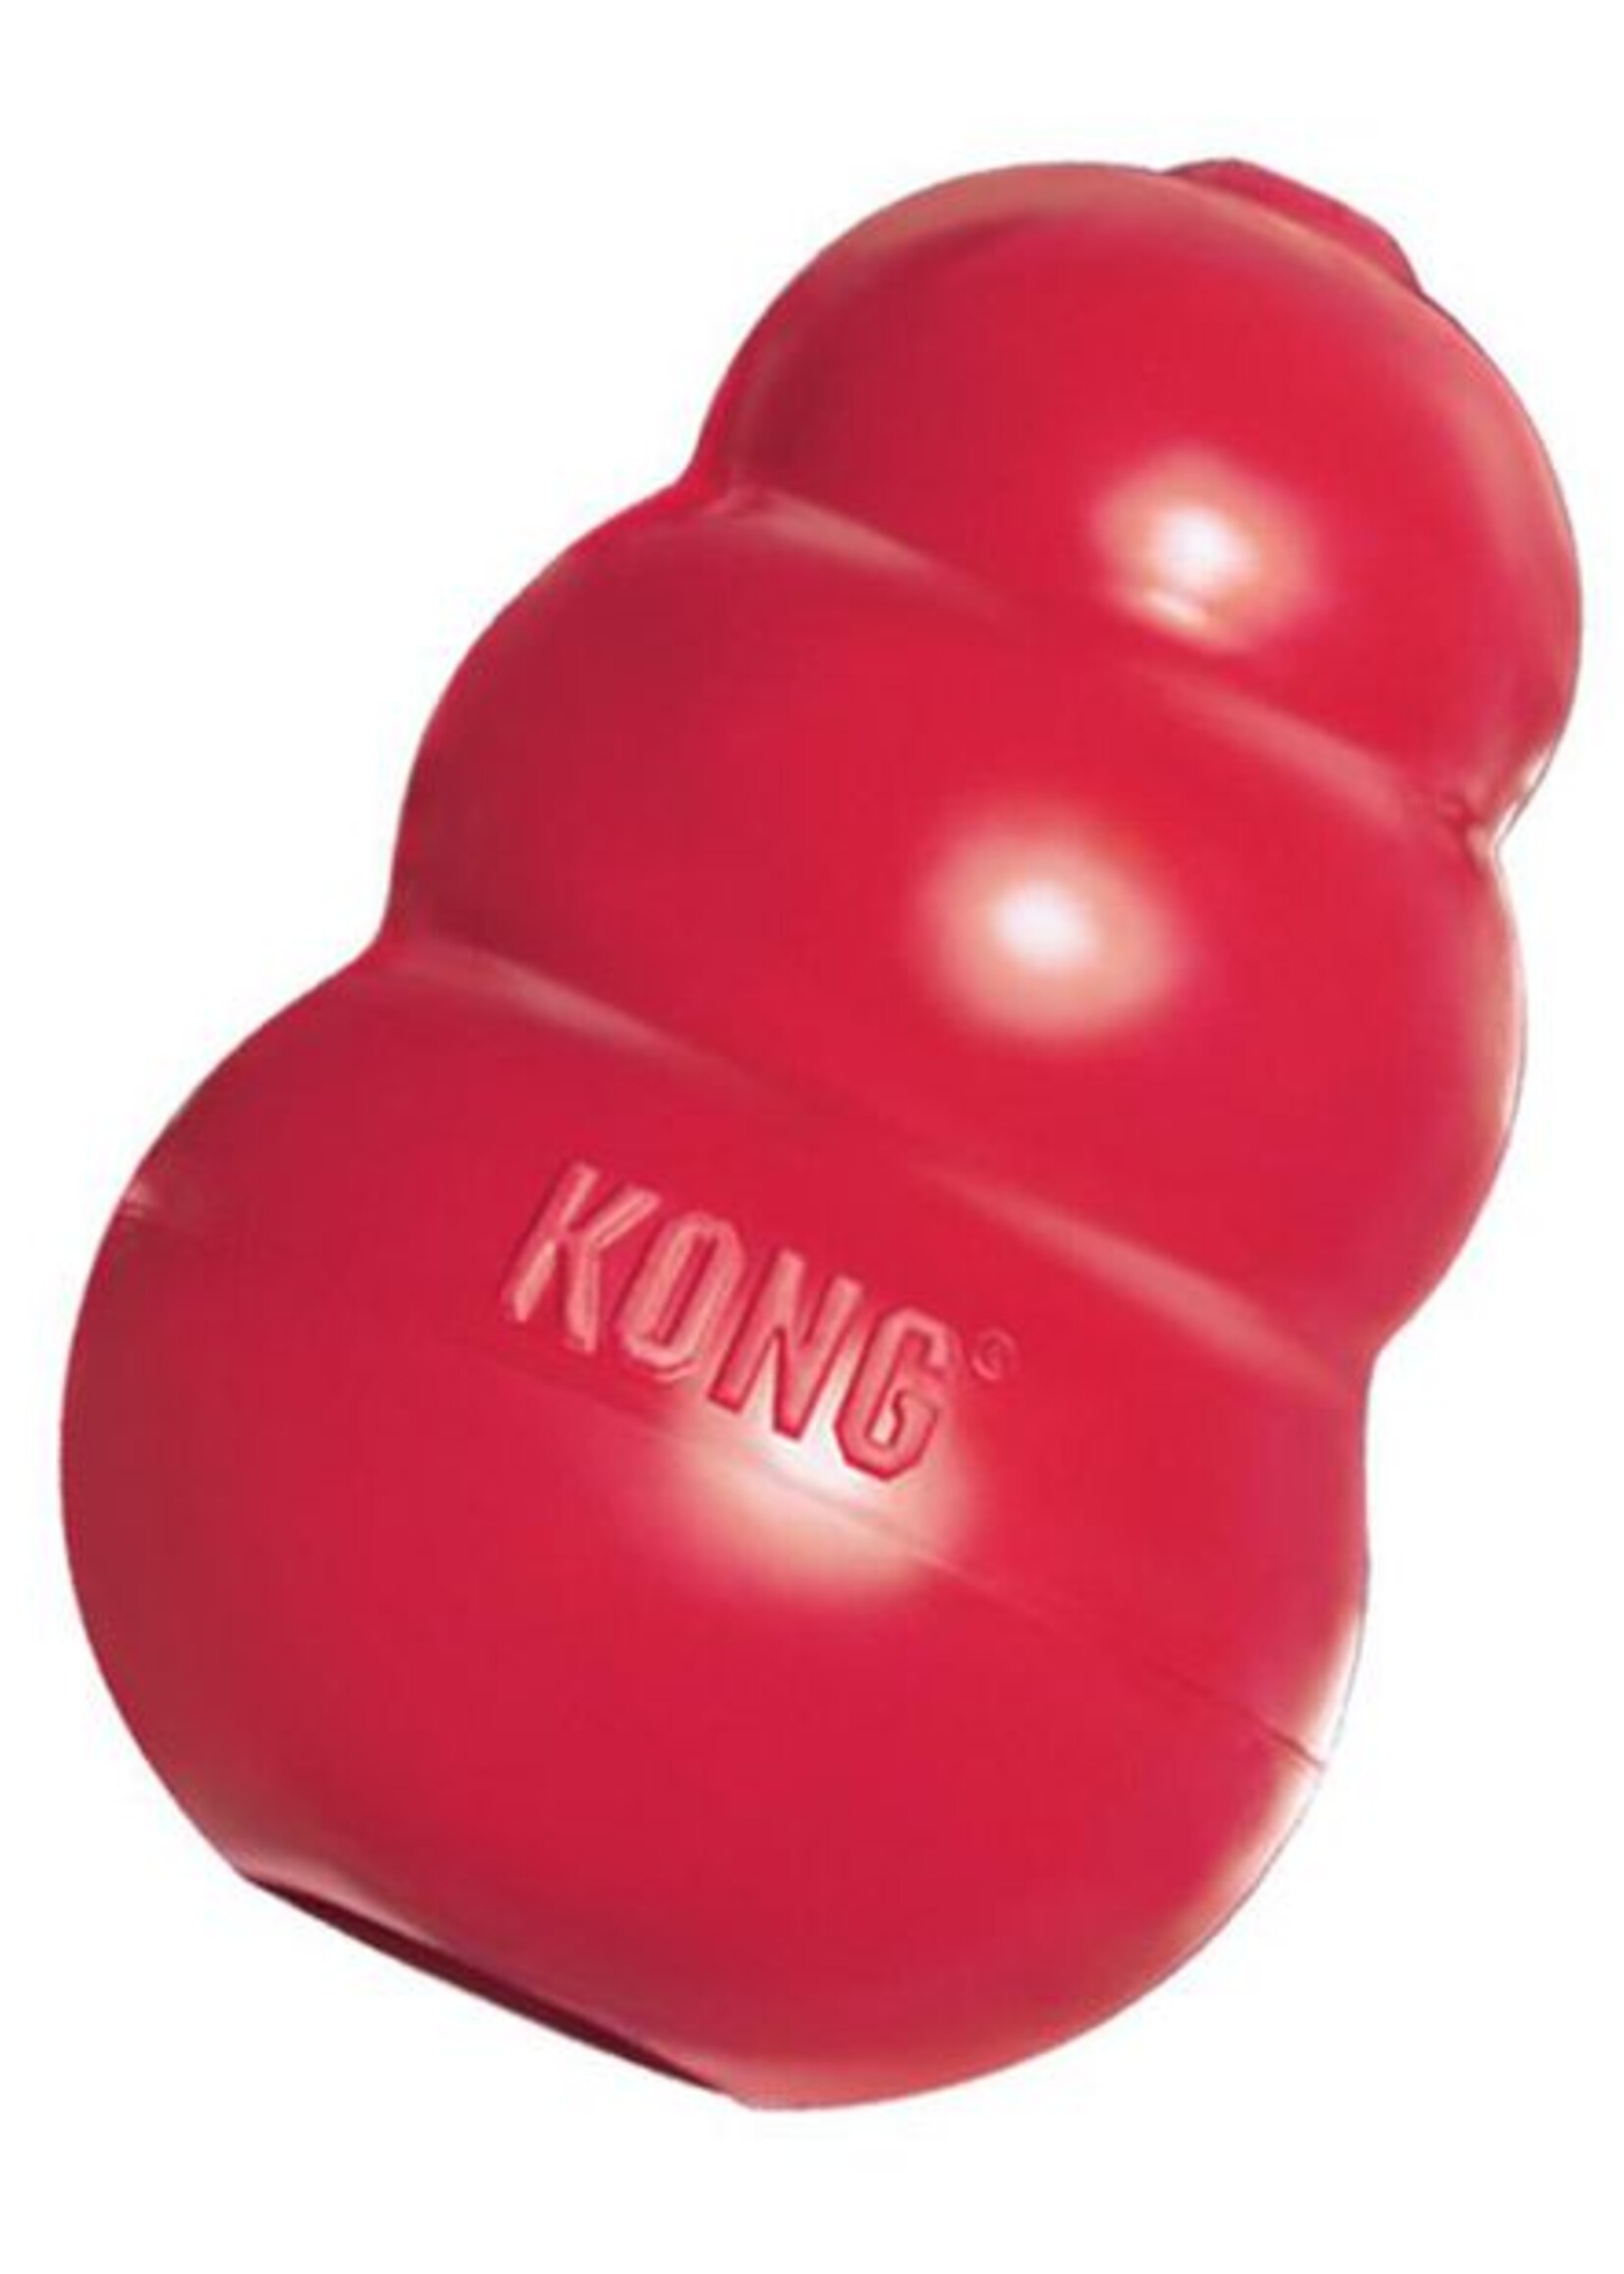 Kong Kong Classic Medium